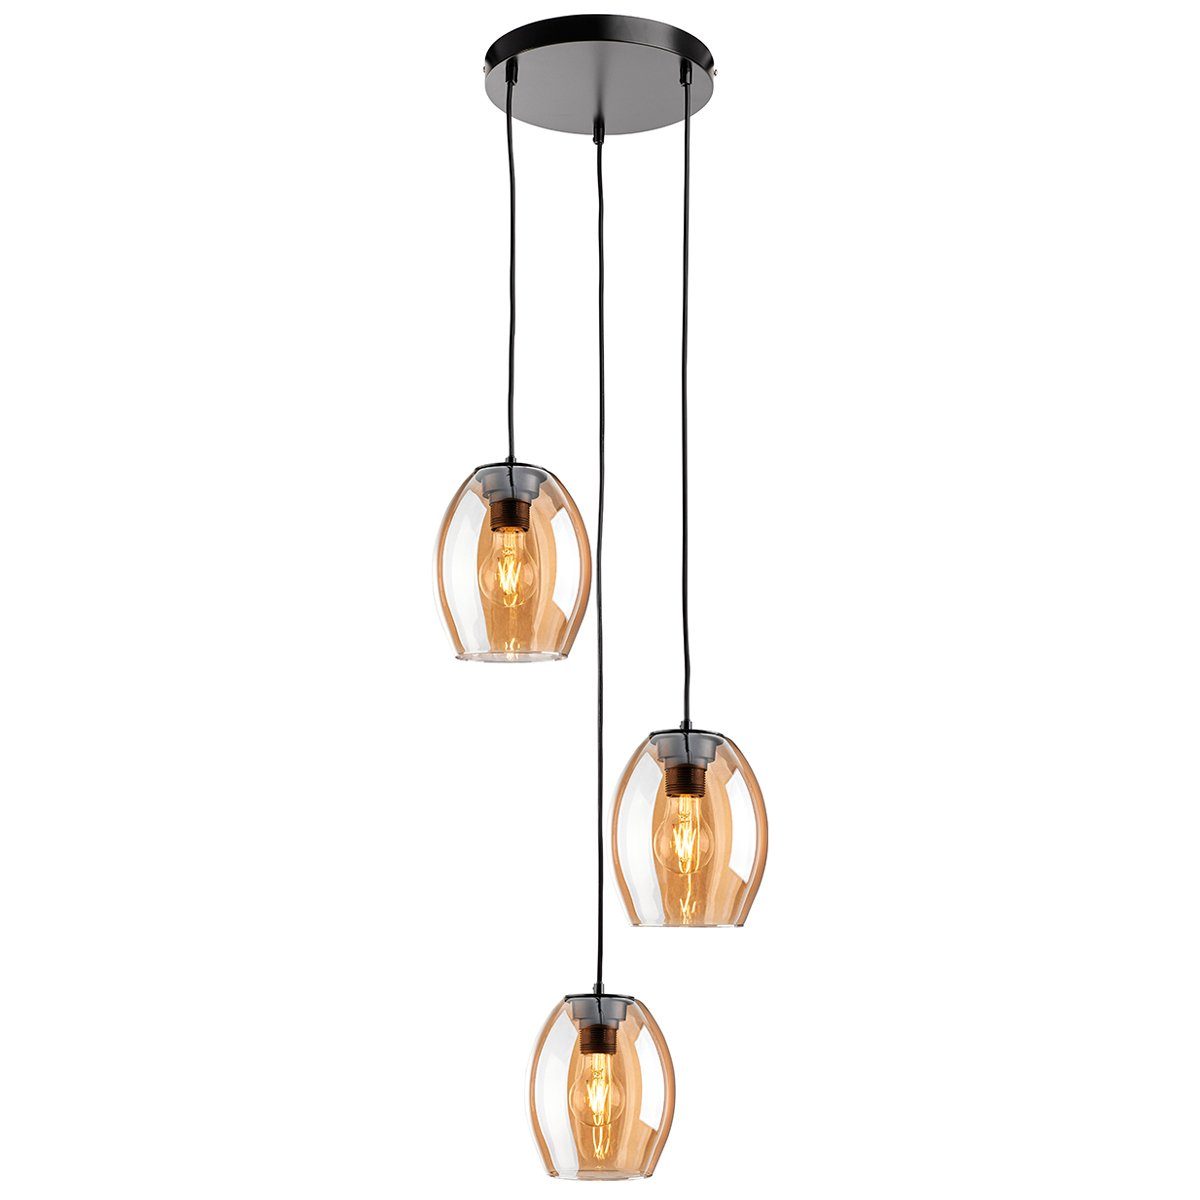 MeLiTec LED Pendelleuchte Amberglas, flammig, warmweiß, zeitlos klassisch, Pendel, 3 ja, modern, DP30, Glas